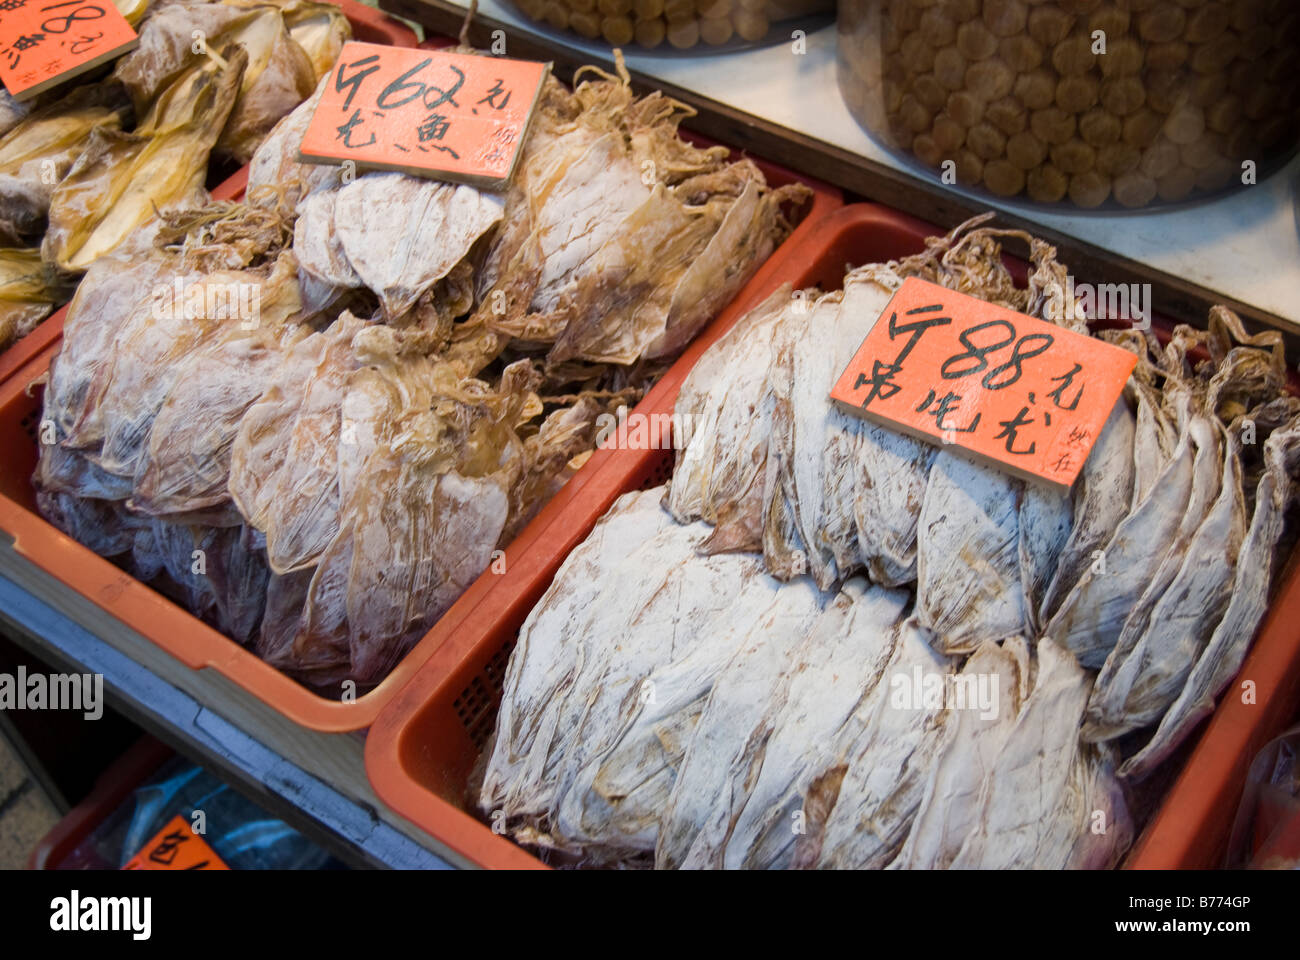 Esposizione di pesce secco, Des Voeux Road West, Sai Ying Pun, Victoria Harbour, Hong Kong Island, Hong Kong, Repubblica popolare cinese Foto Stock